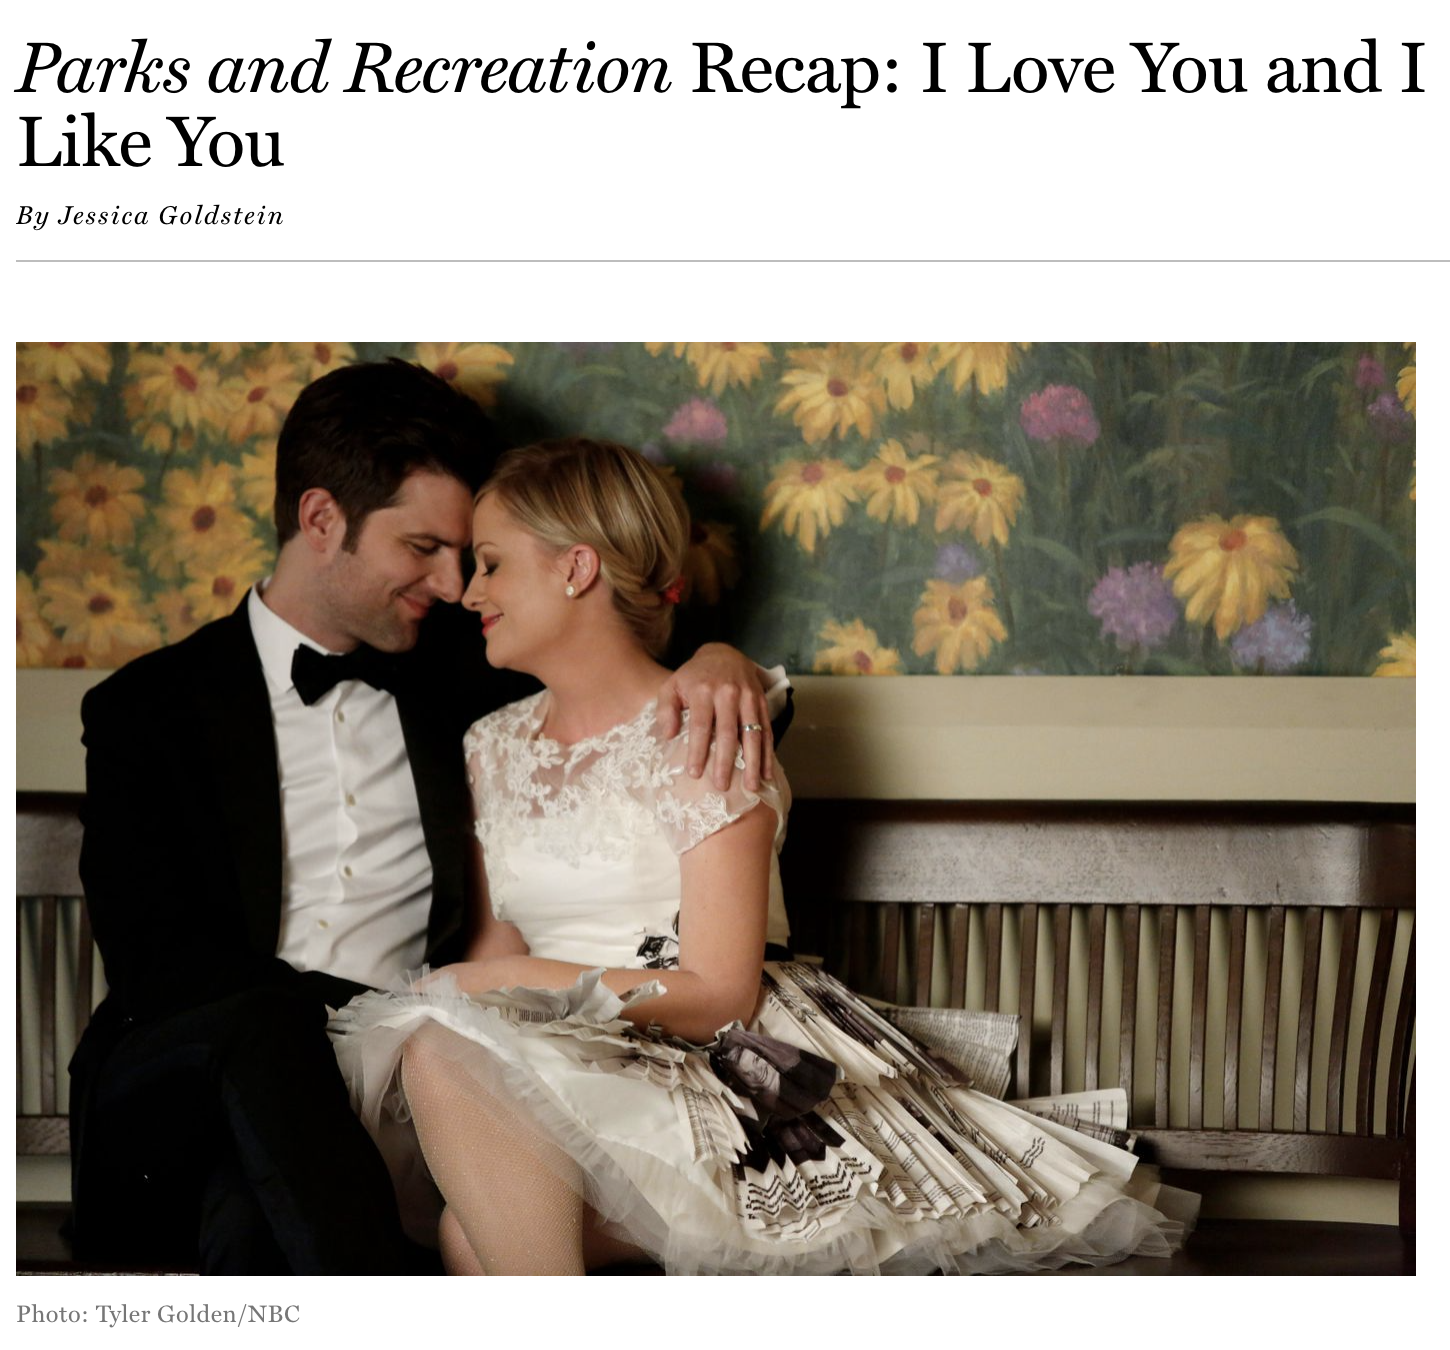   https://www.vulture.com/2013/02/parks-and-recreation-recap-season-5-leslie-ben-wedding.html  